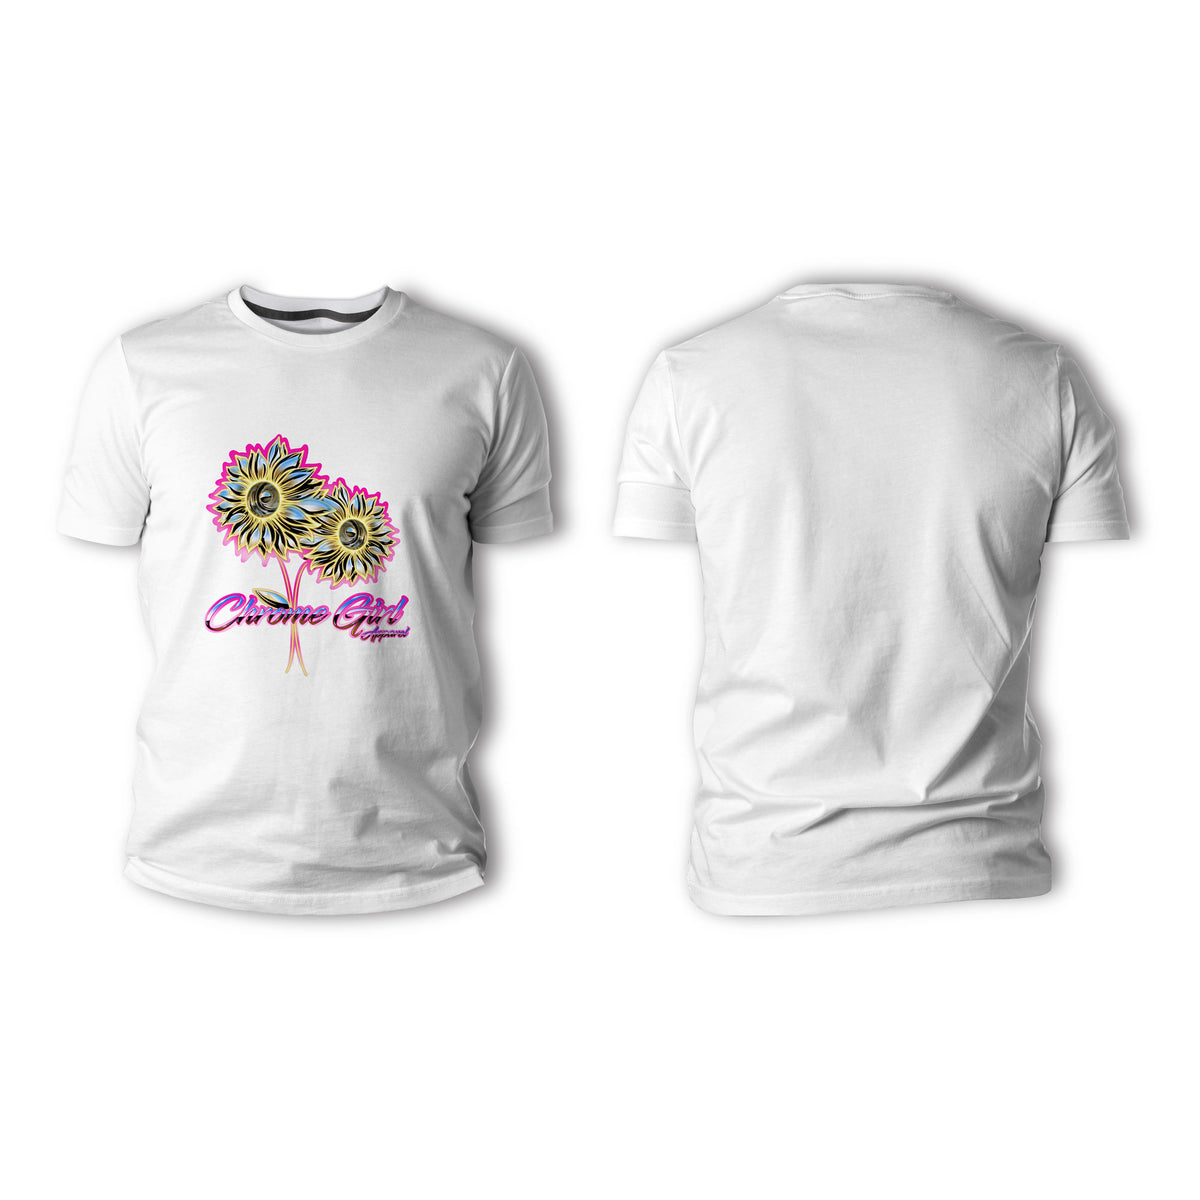 Flower Chrome Girl Shirts and Hoodies